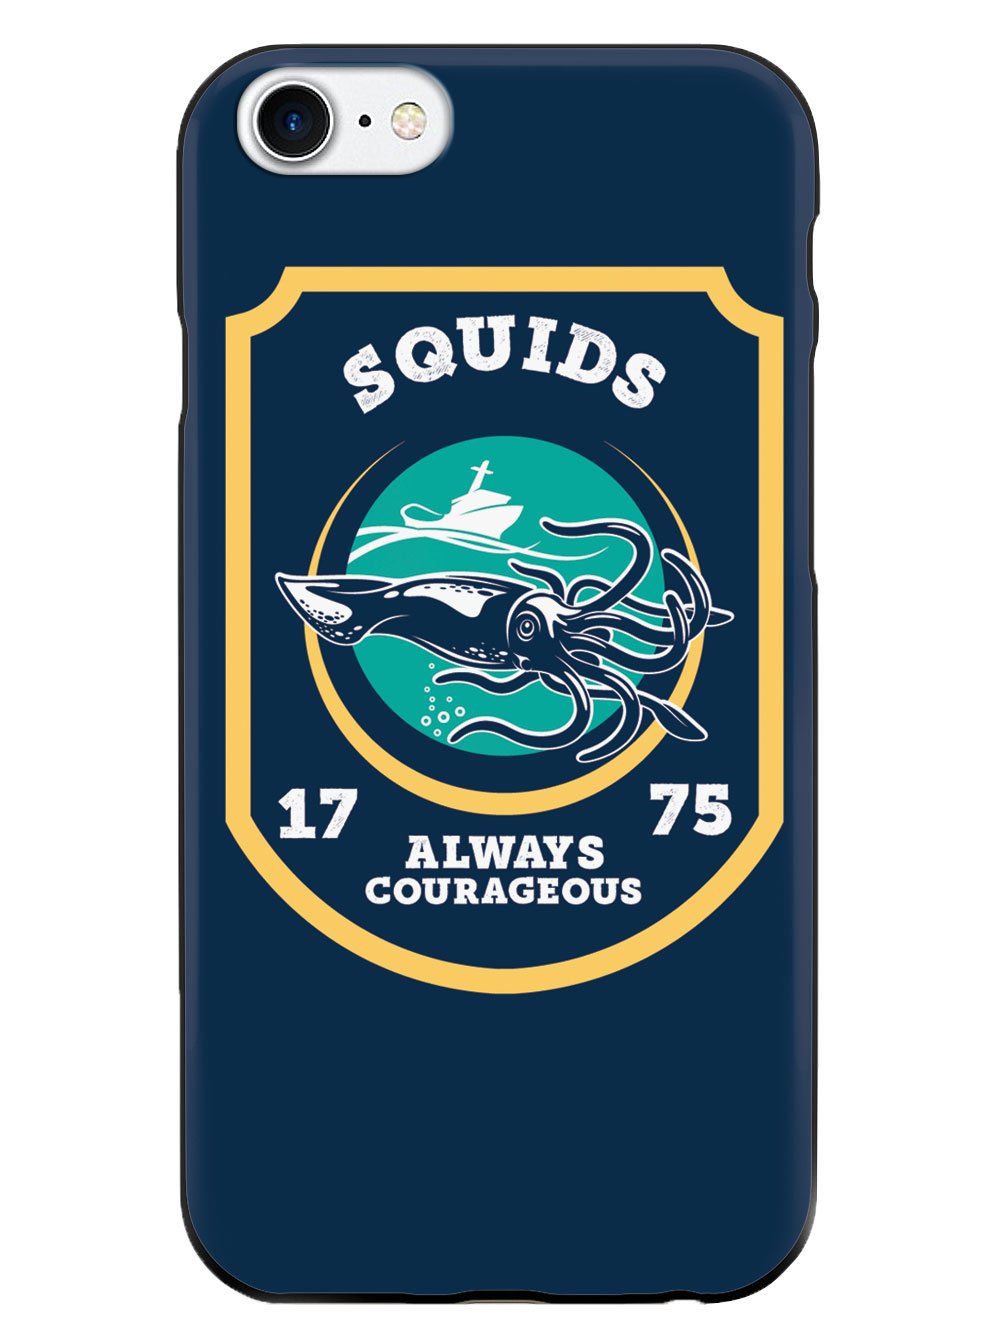 Squids - US Navy Case